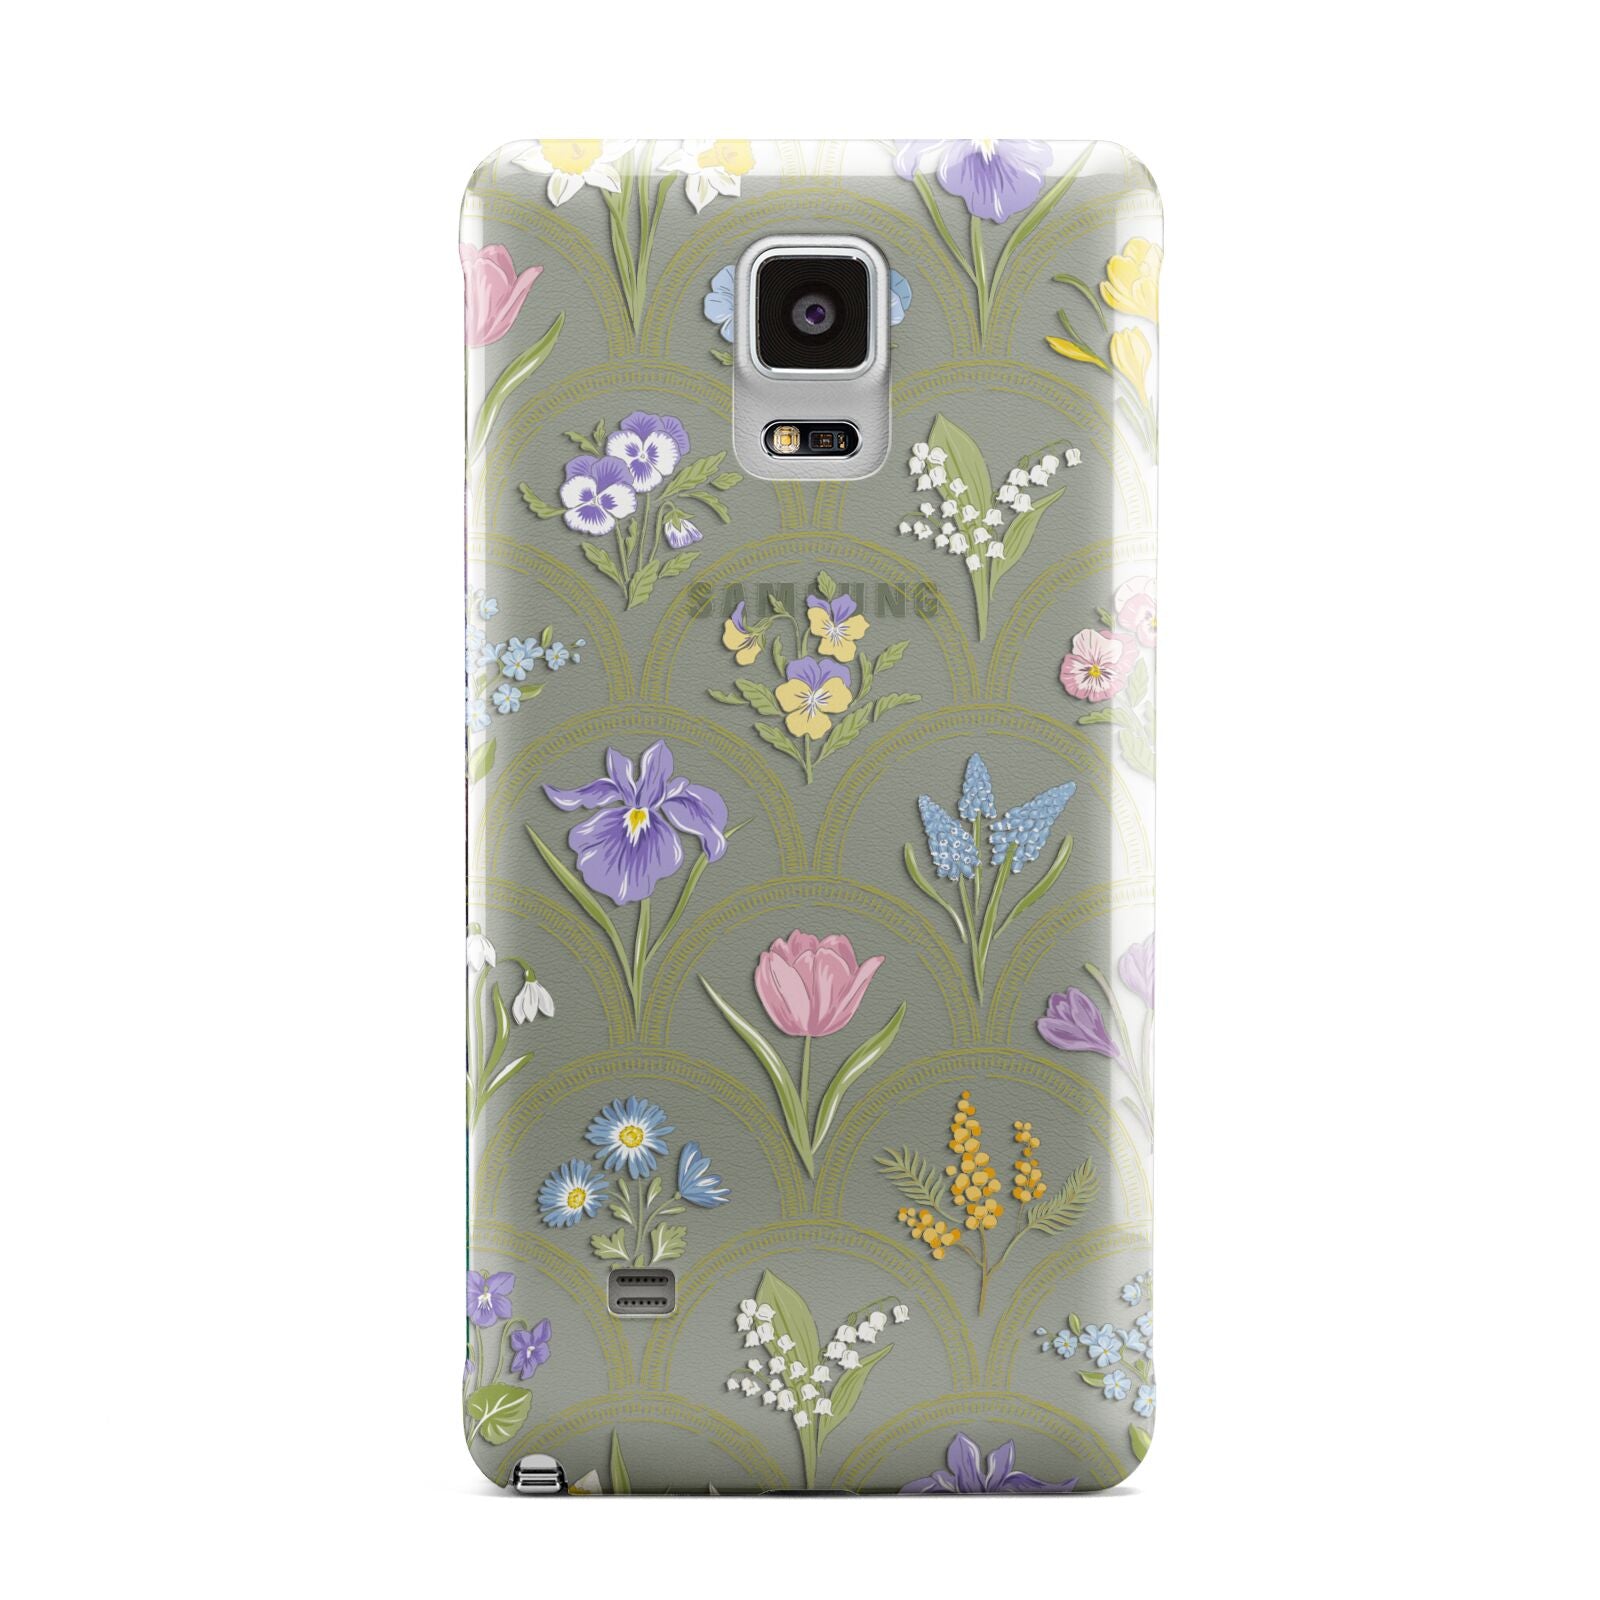 Spring Floral Pattern Samsung Galaxy Note 4 Case